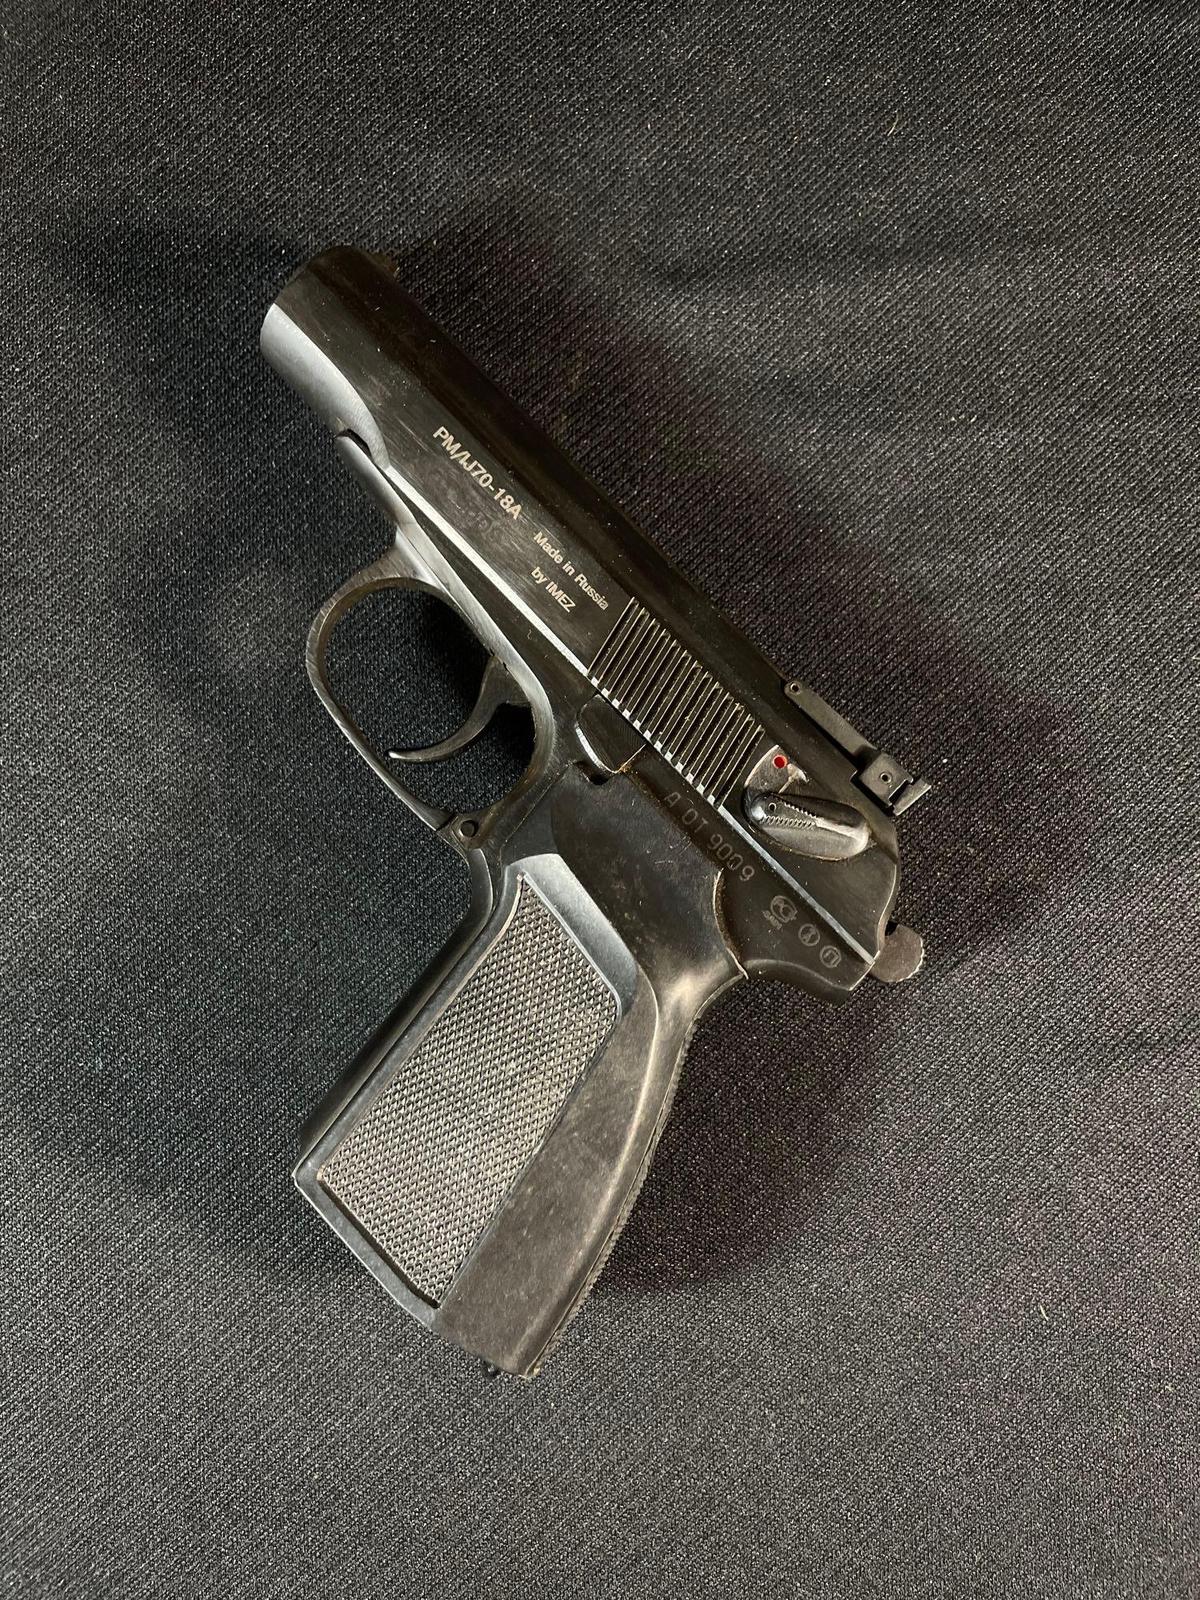 Imez Makarov 9mm Pistol, Serial# A0T9009